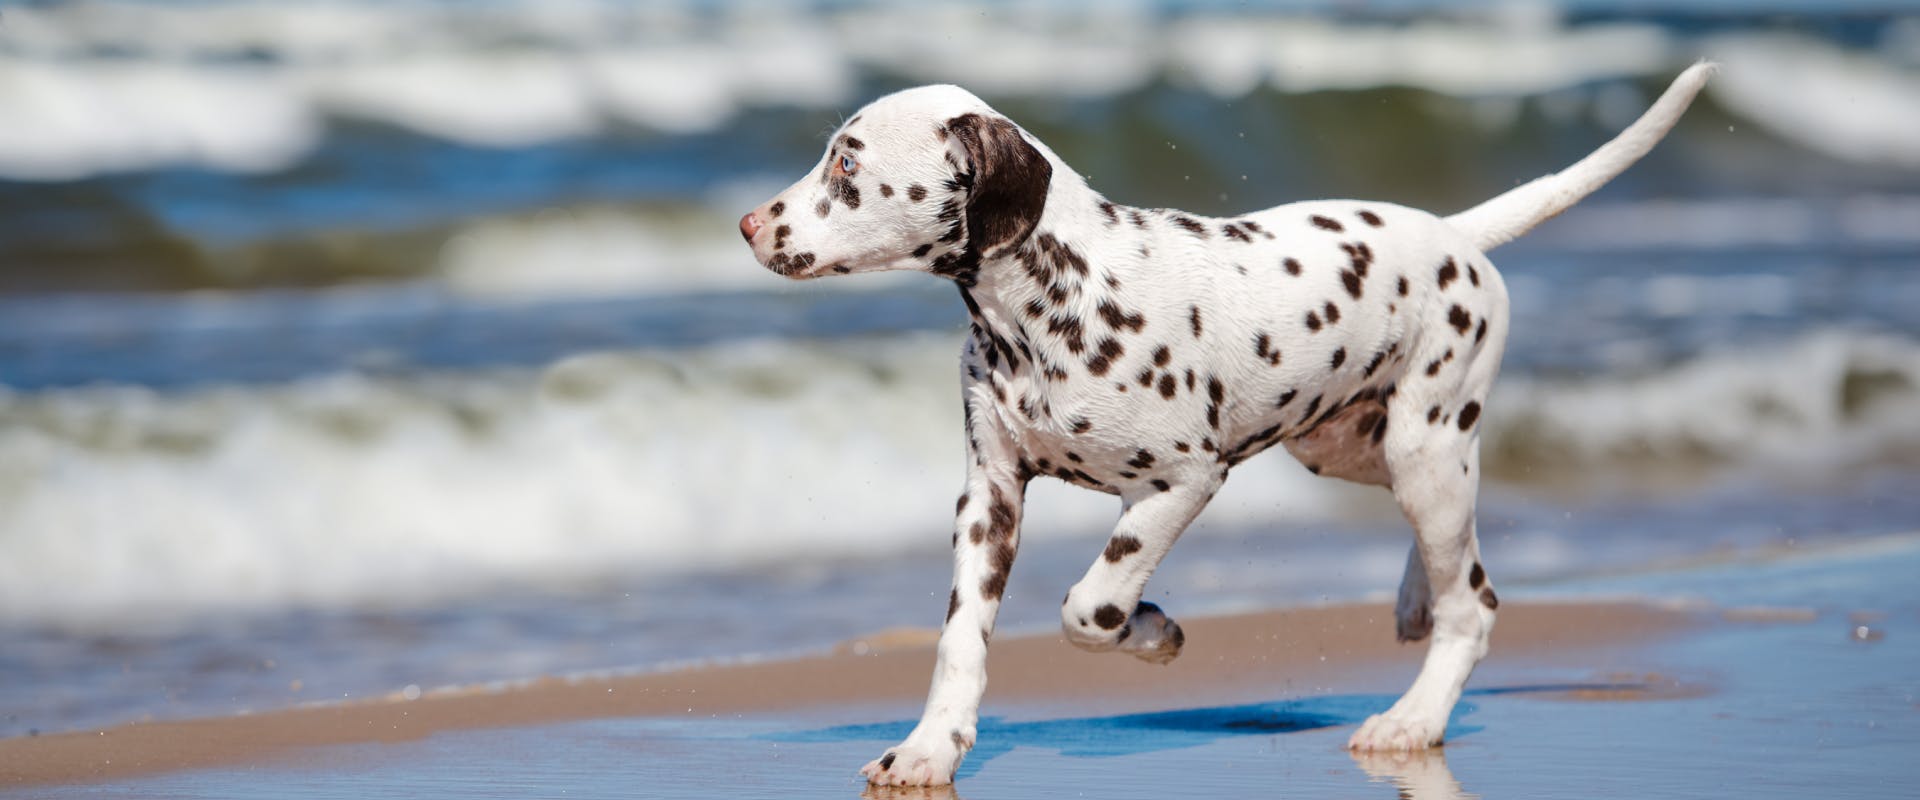 dalmatian puppy running on a beach